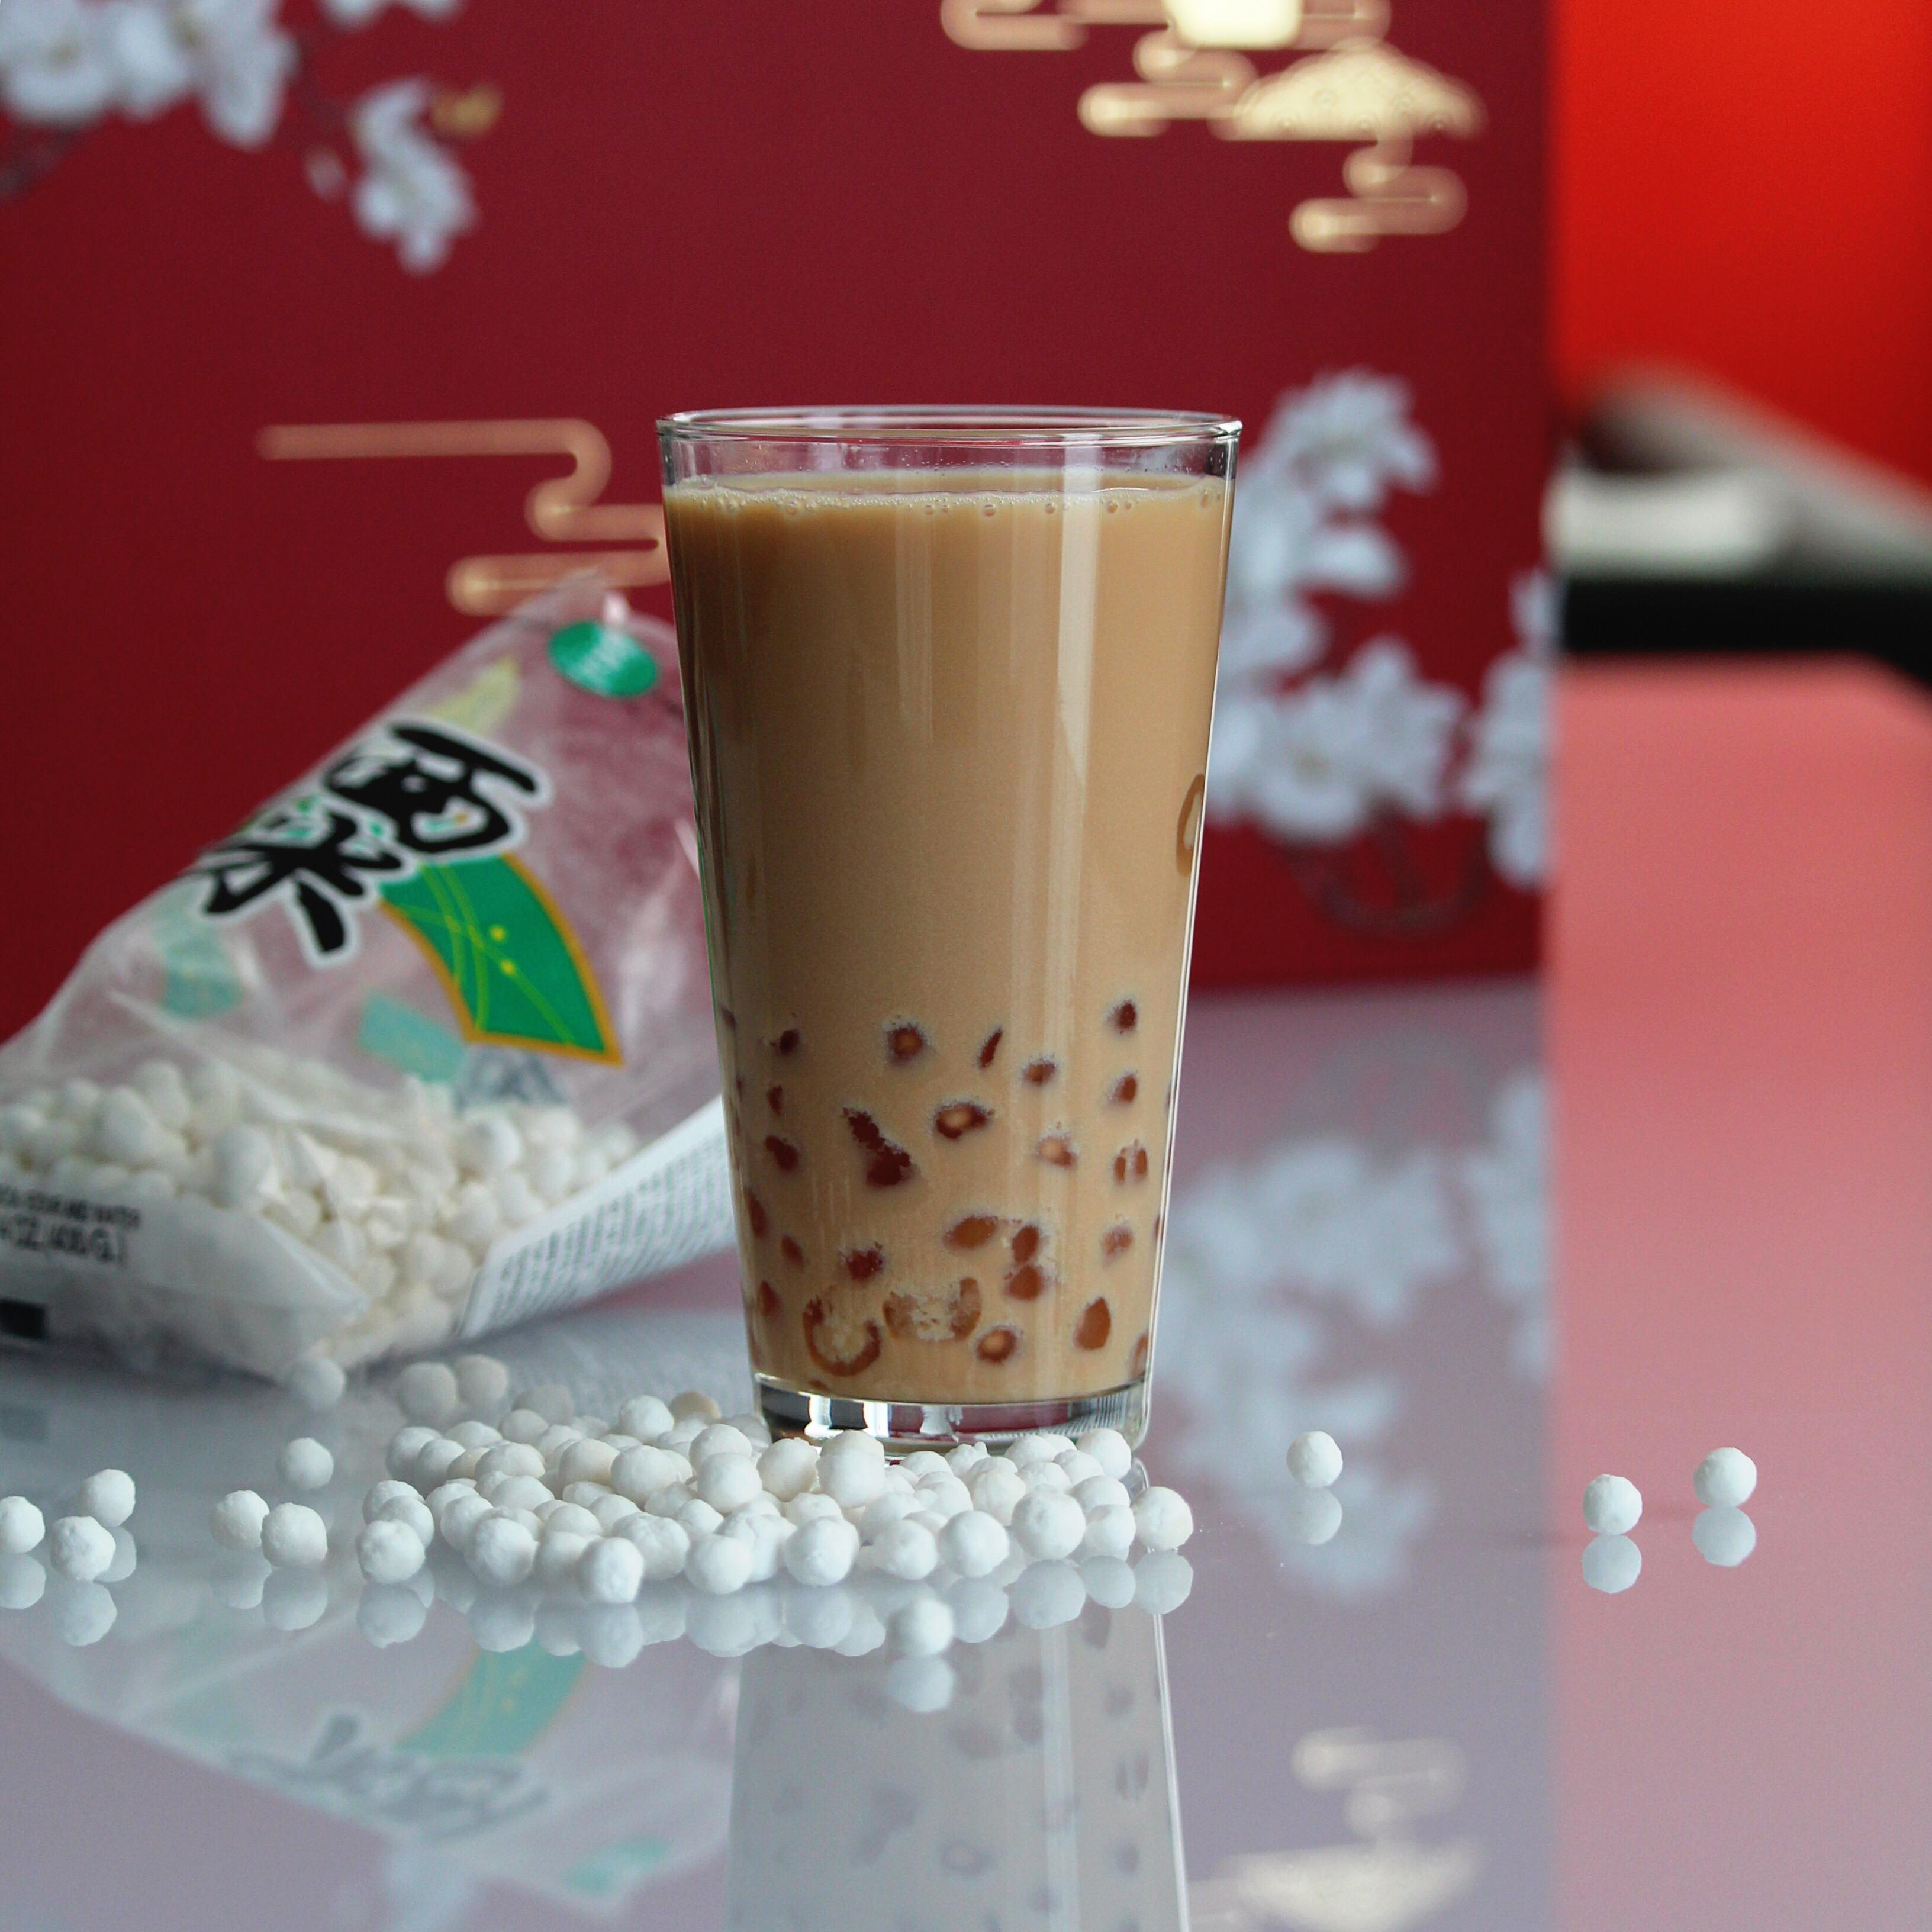 Iced Black Tapioca Pearl Balls Bubble Tea From Taiwan Starch Balls in Milk Tea 